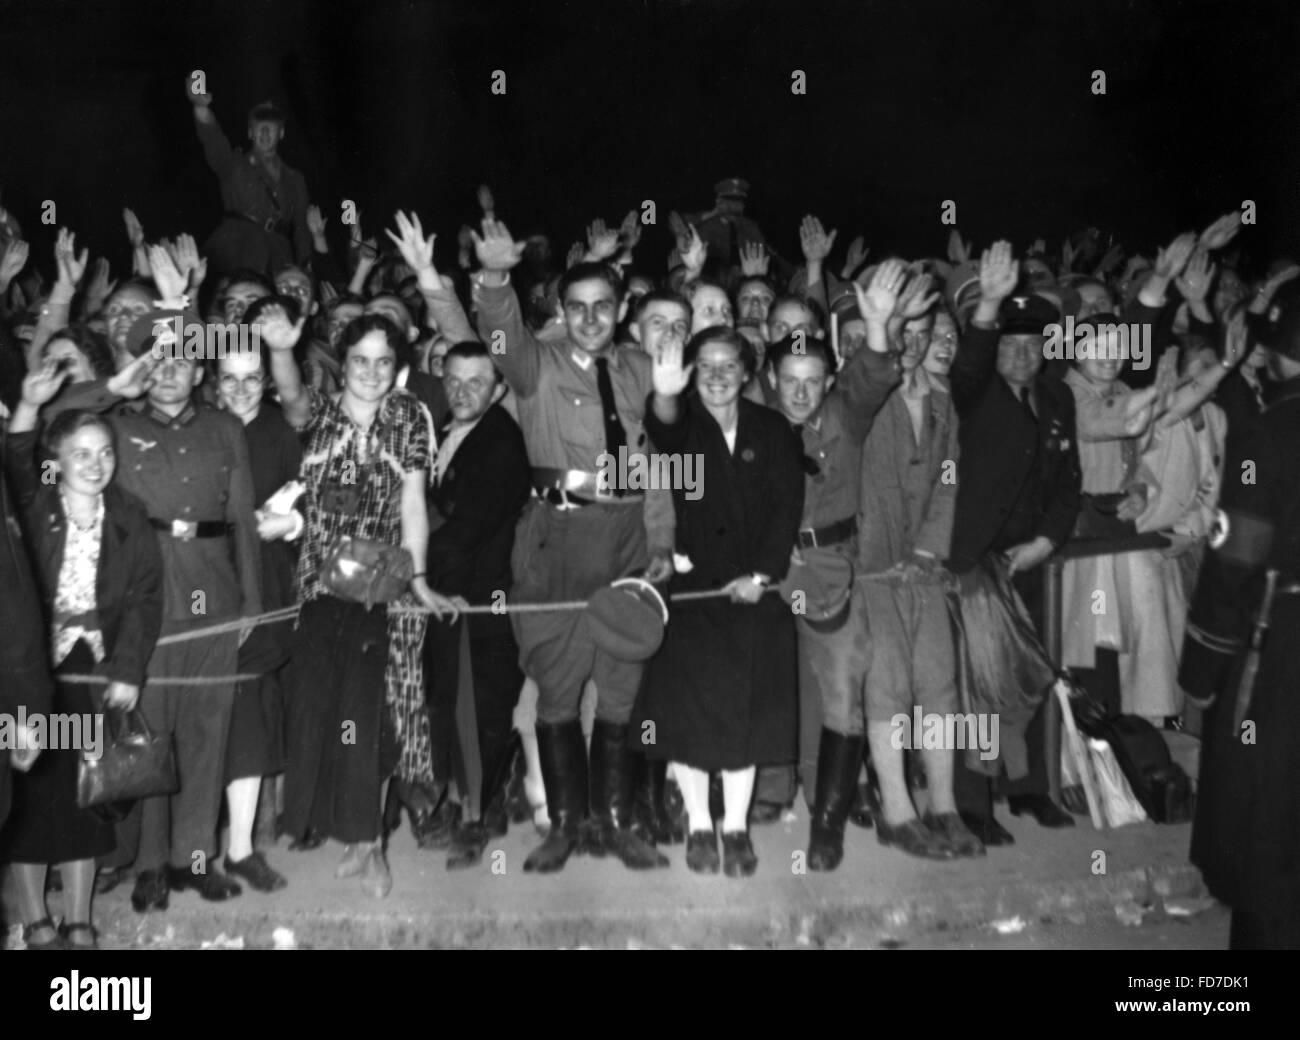 Crowd in front of the Hotel Deutscher Hof during the Reichsparteitag (Reich Party Congress),1936 Stock Photo